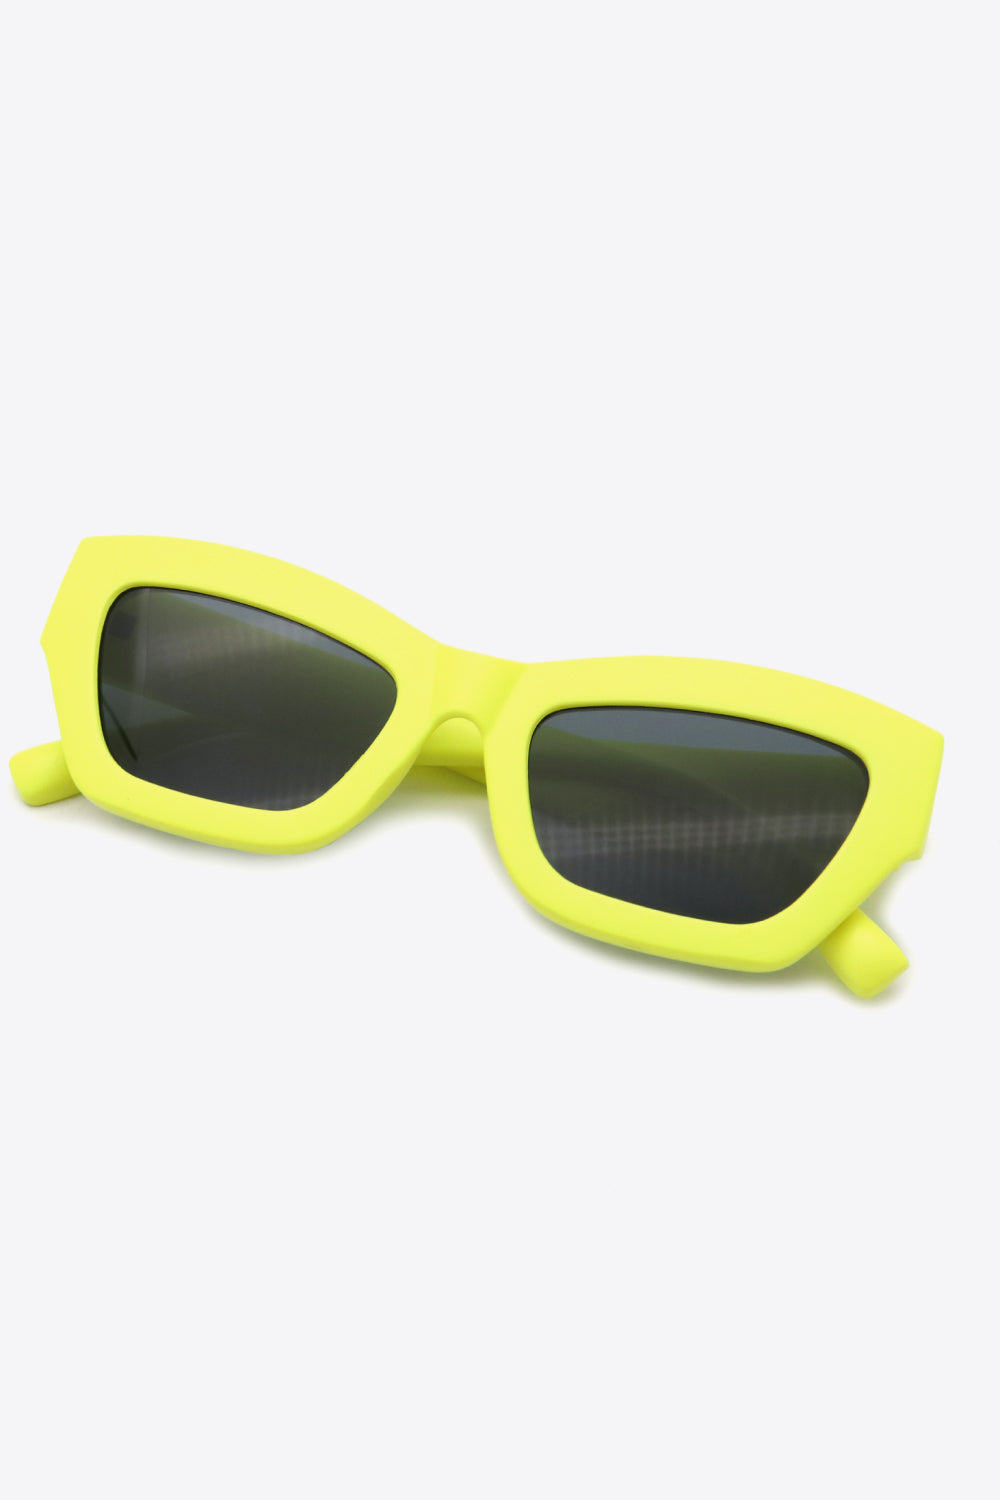 Classic Wayfarer Polycarbonate UV400 Sunglasses in Lemon Yellow